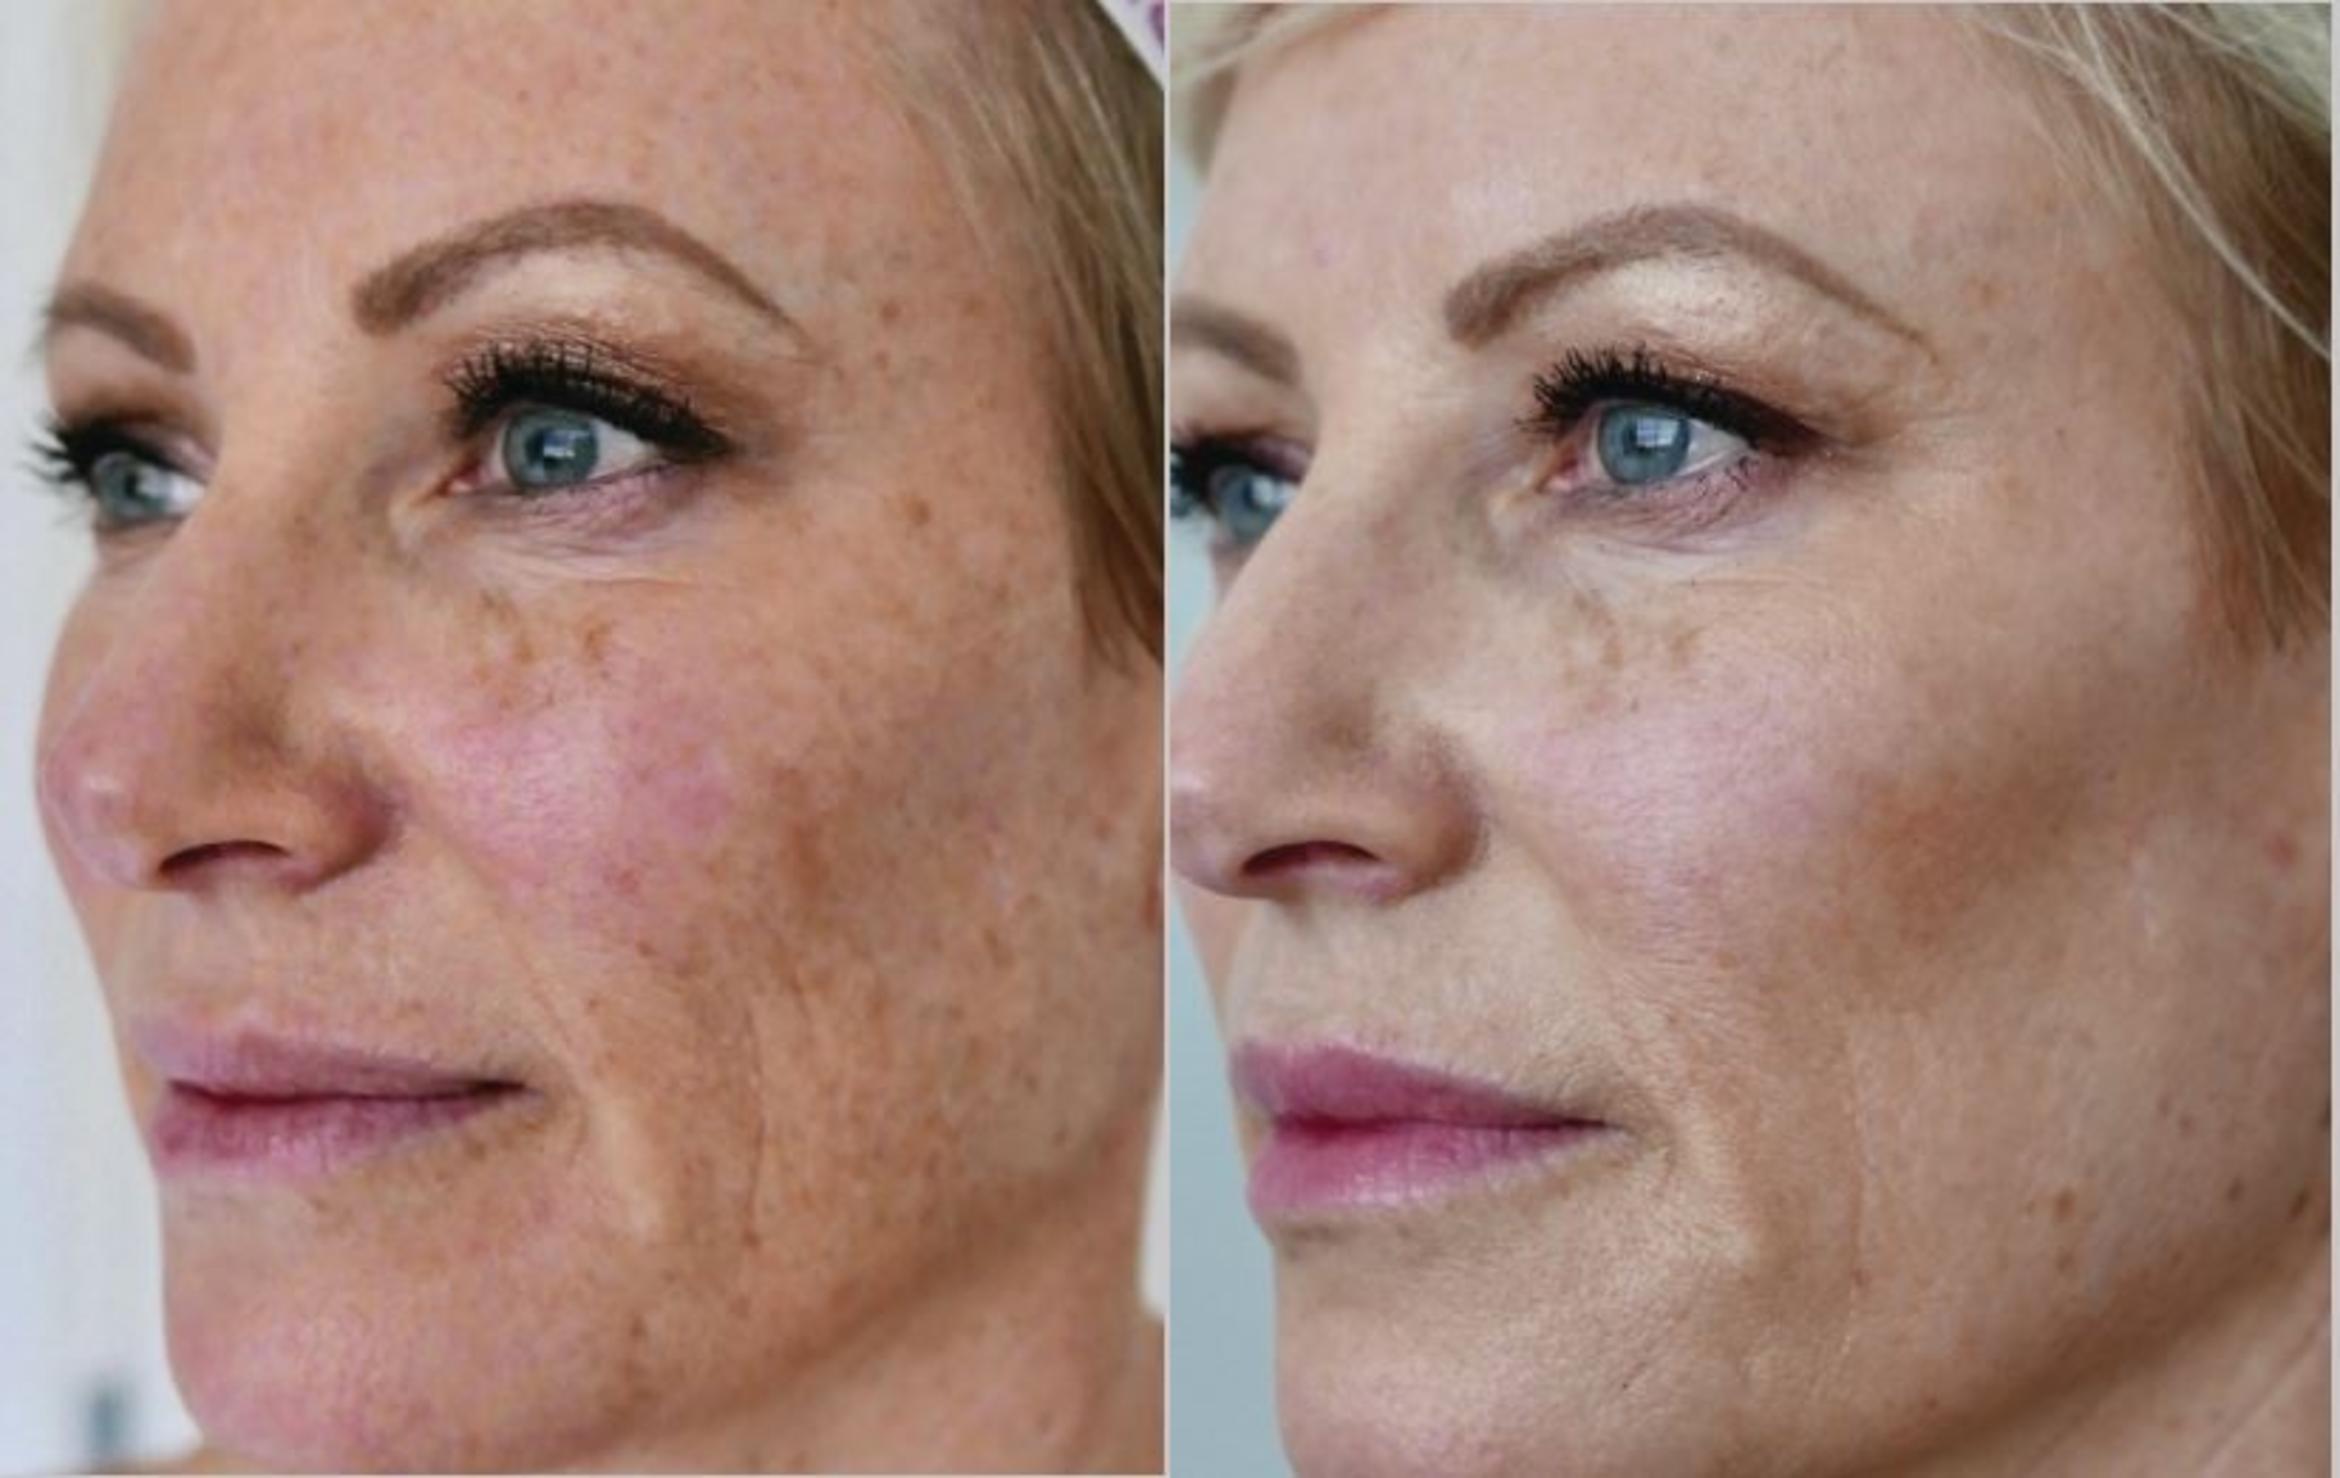 HALO Laser Skin Resurfacing for full face or neck